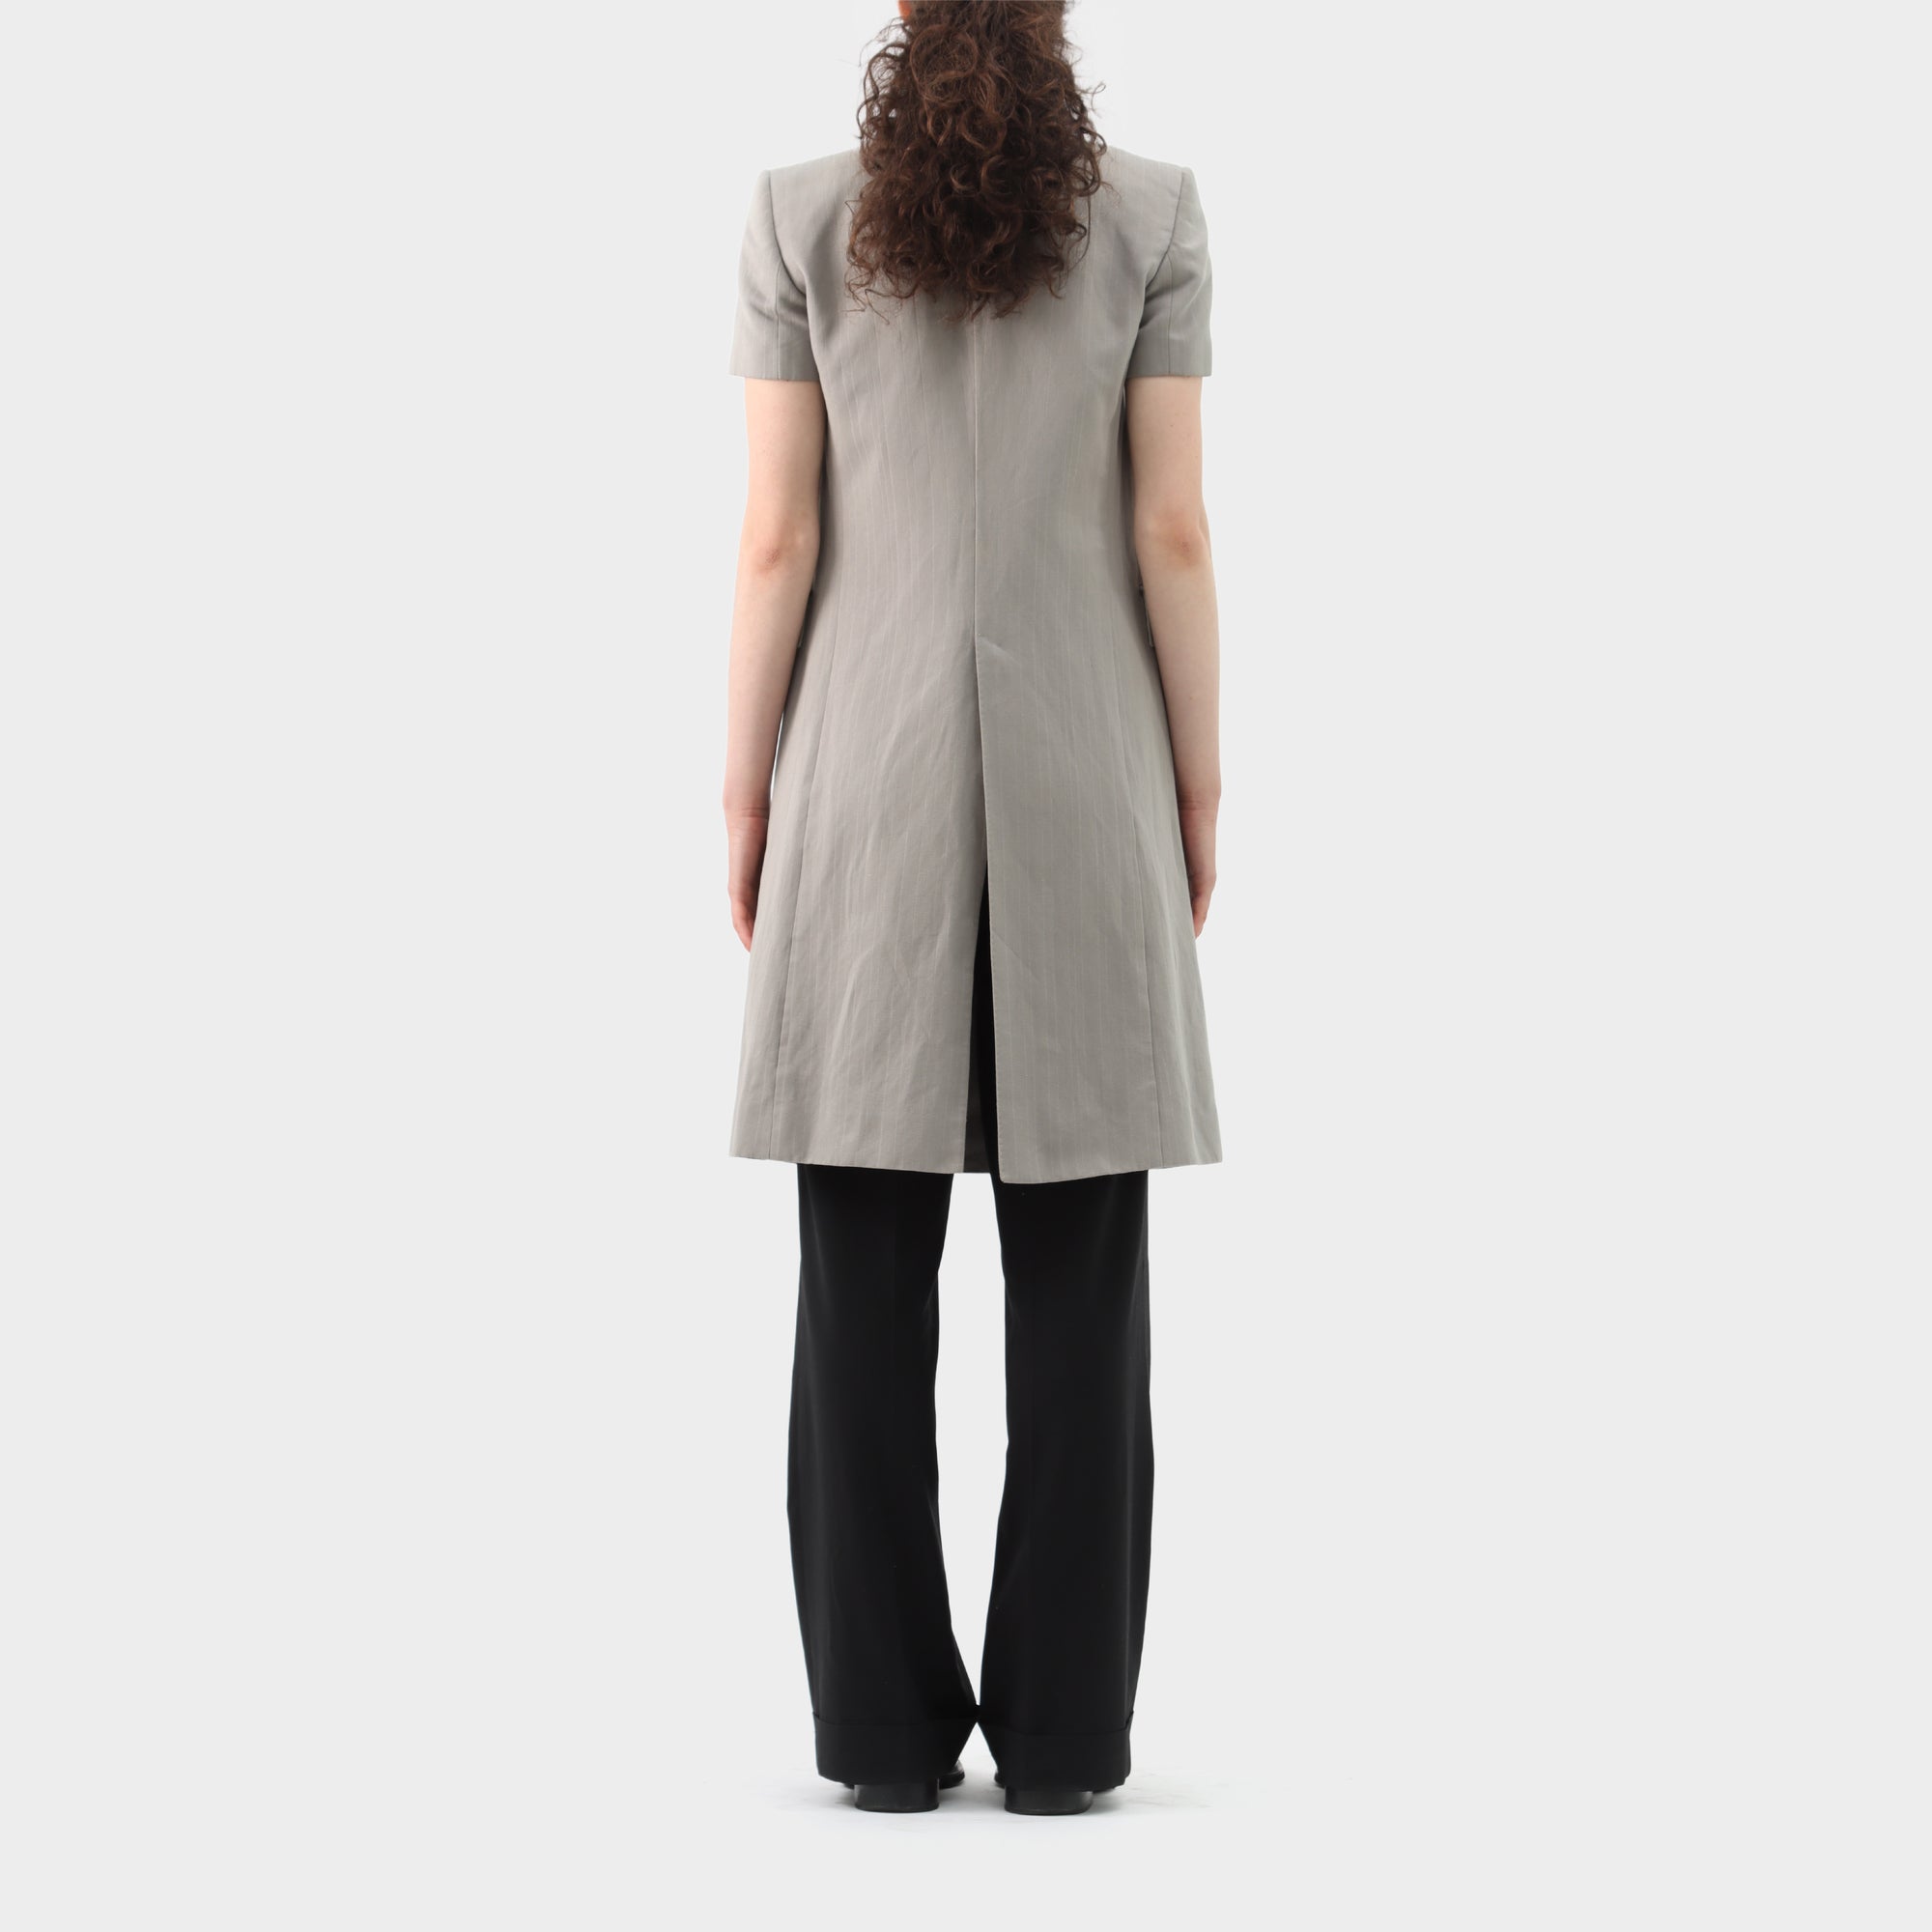 Carol Christian Poell Fe-Male Short Sleeve Blazer Dress